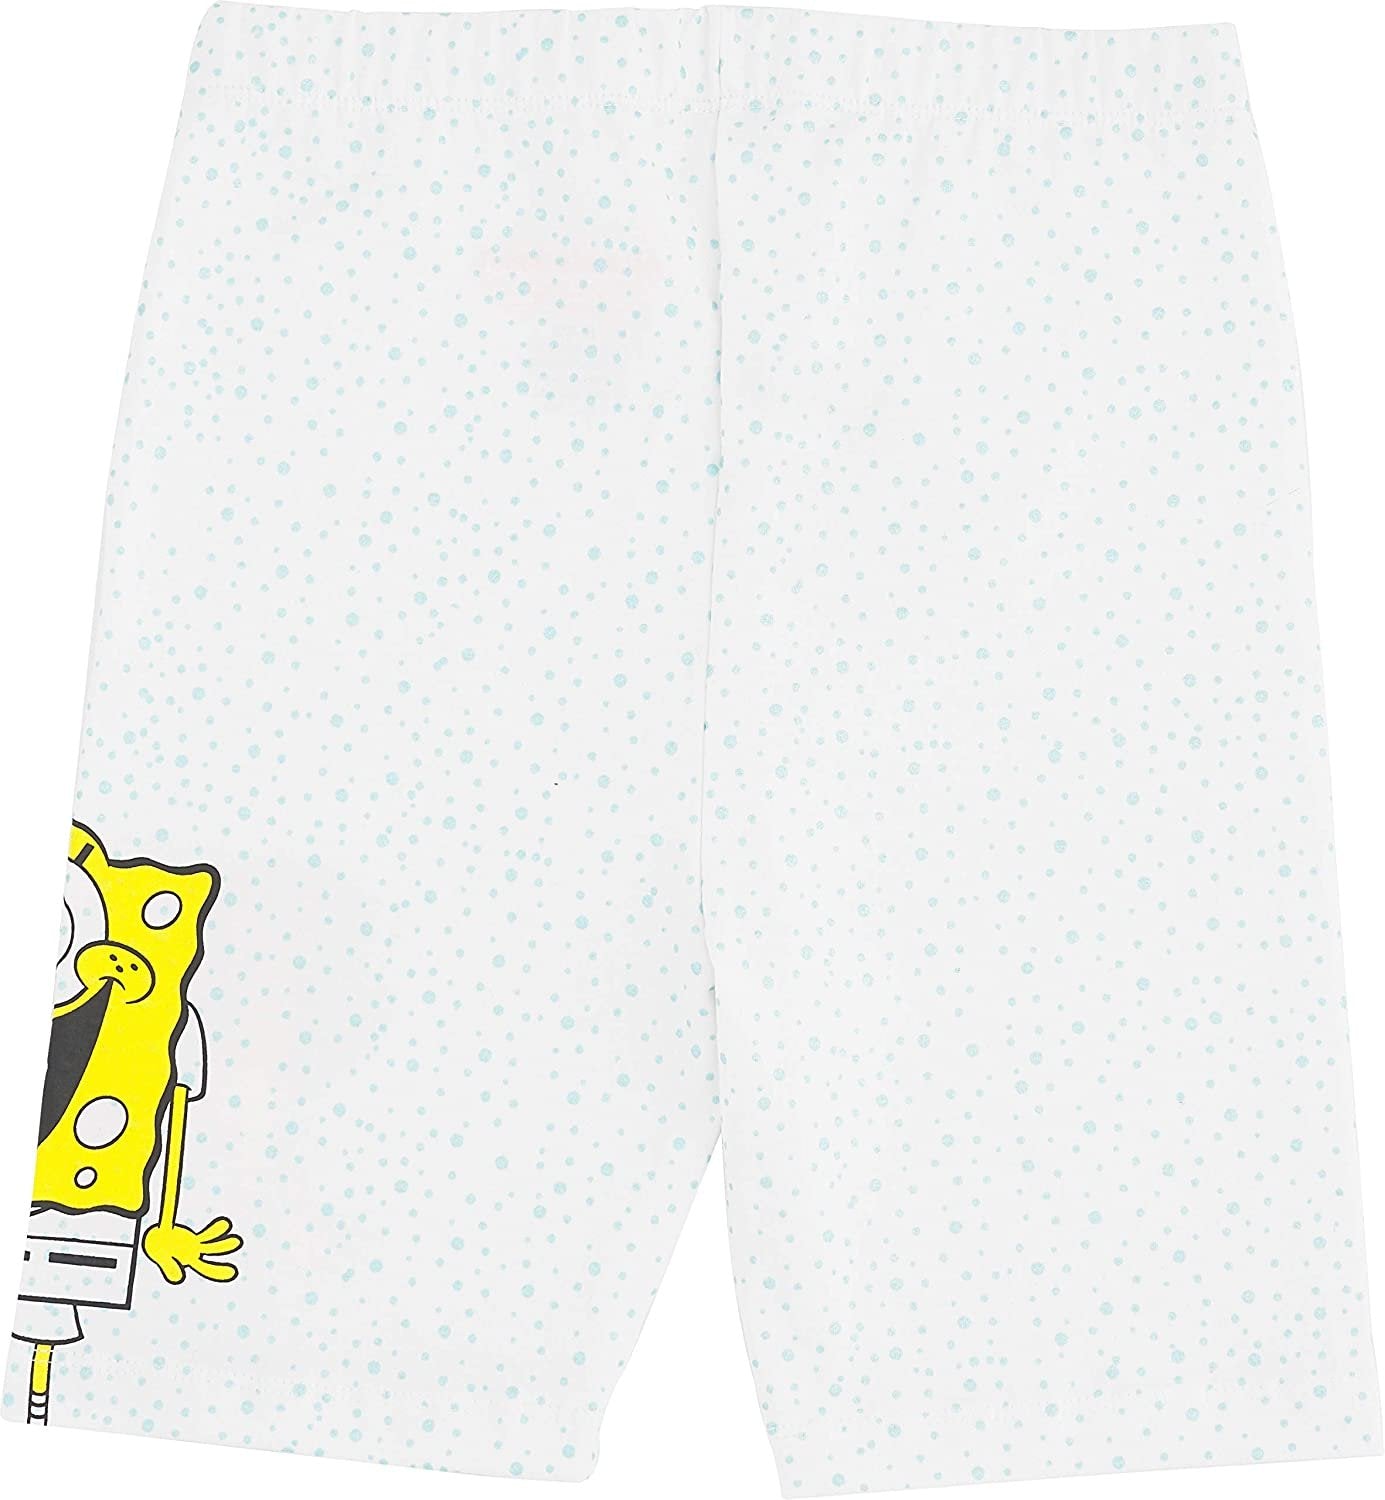 SpongeBob SquarePants Girls Biker Shorts and Oversized Cozy T-Shirt- 2- Piece Set